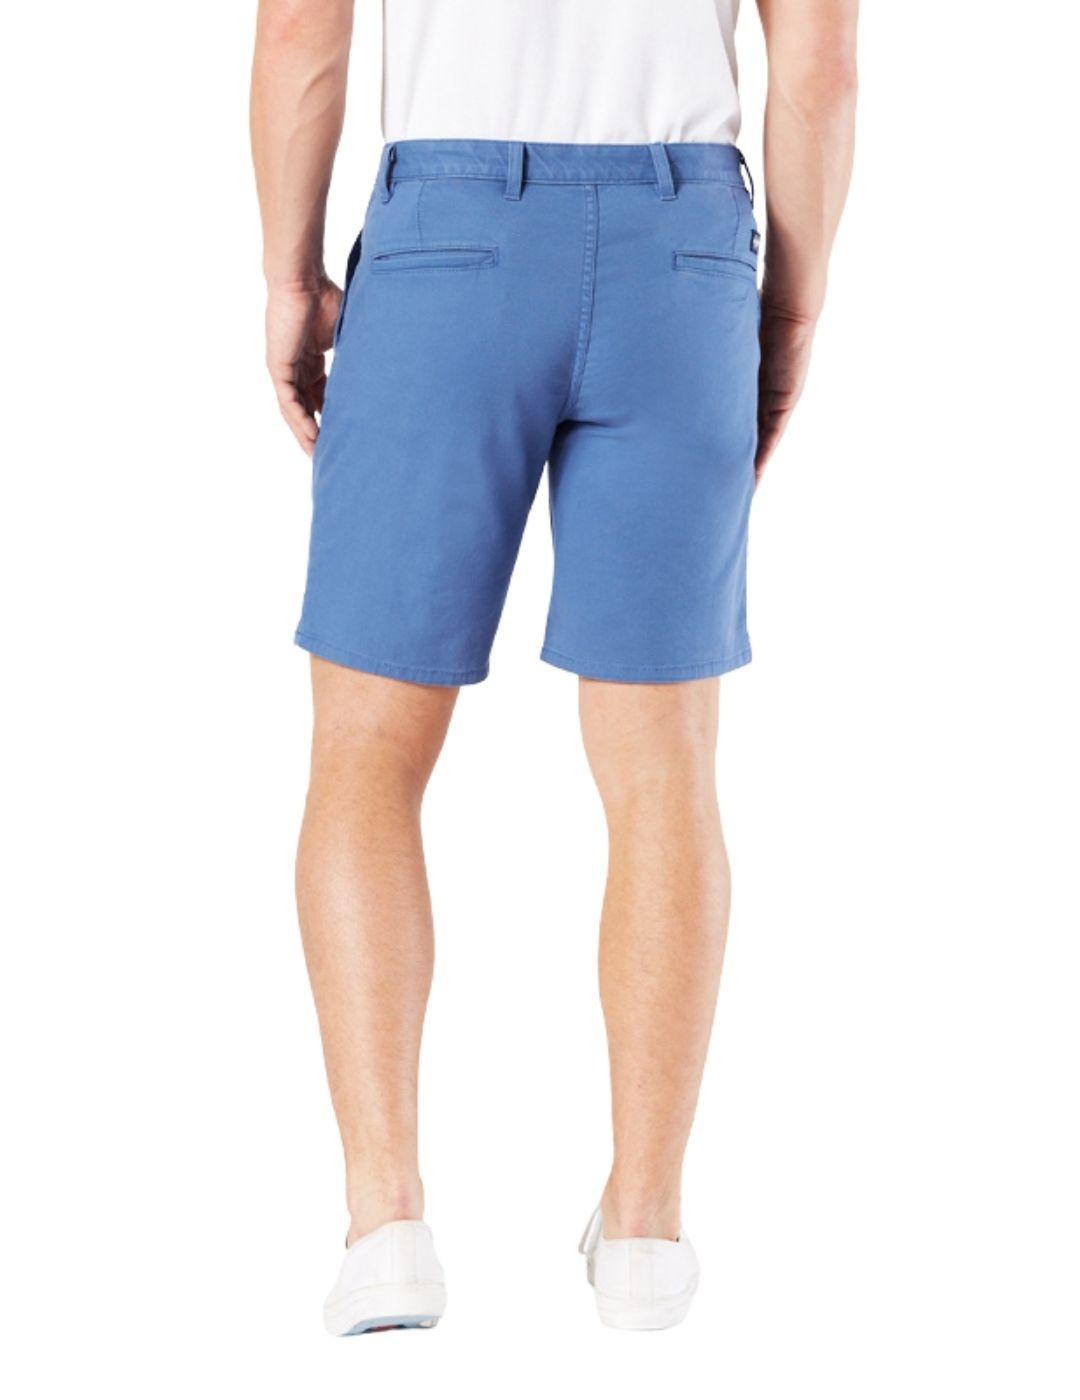 Pantalones cortos Dockers azules de hombre